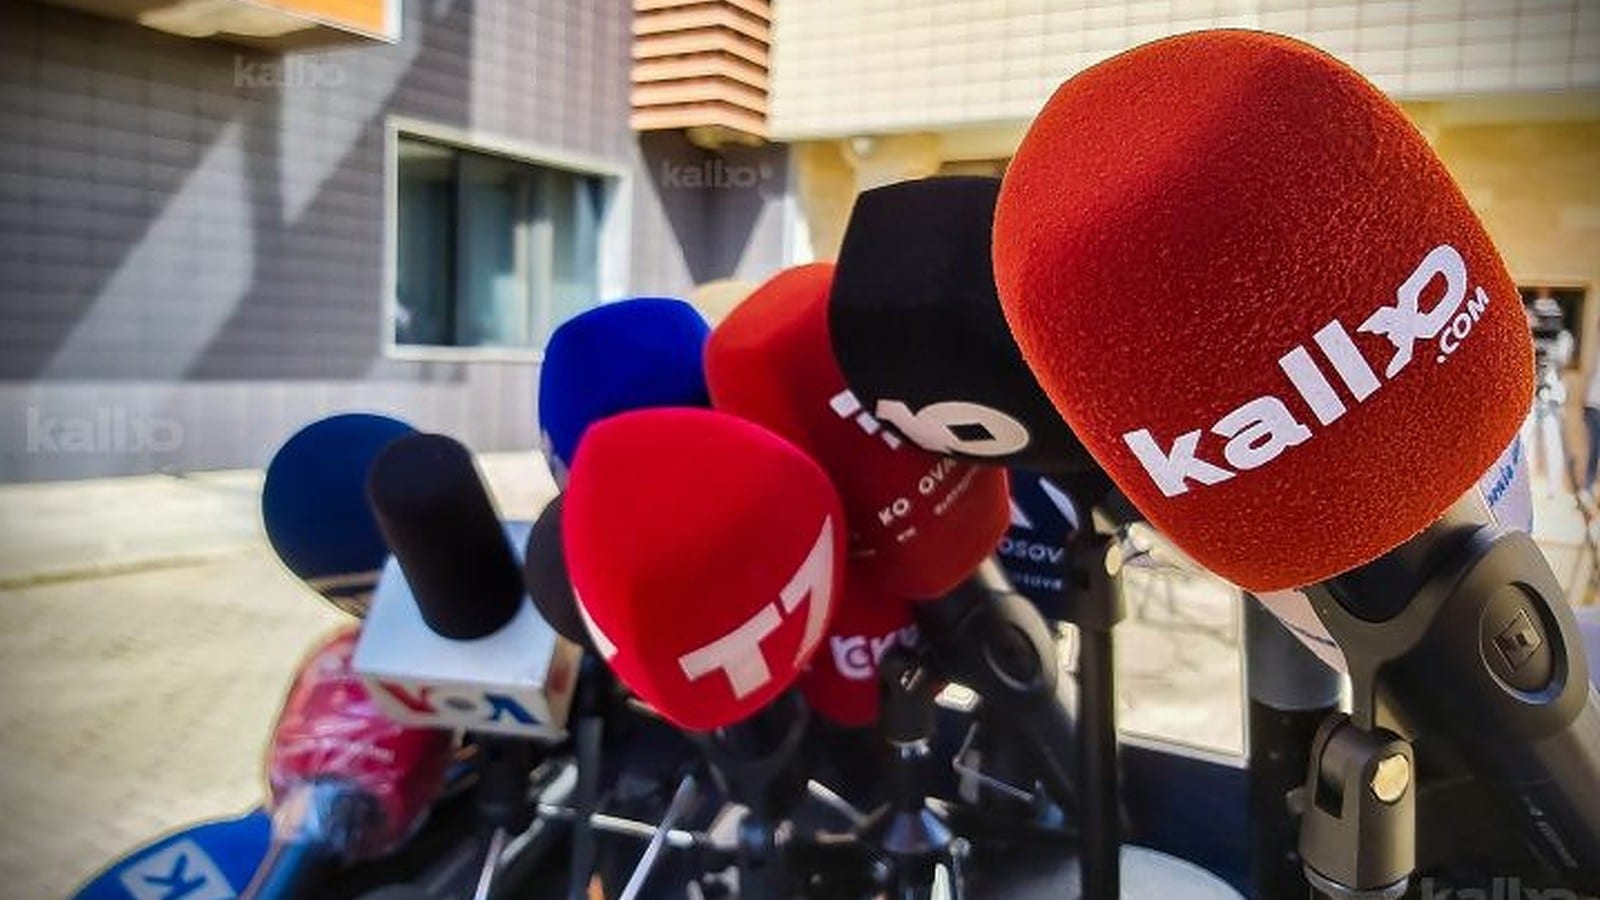 kosovo sees alarming decline in media freedom ranking